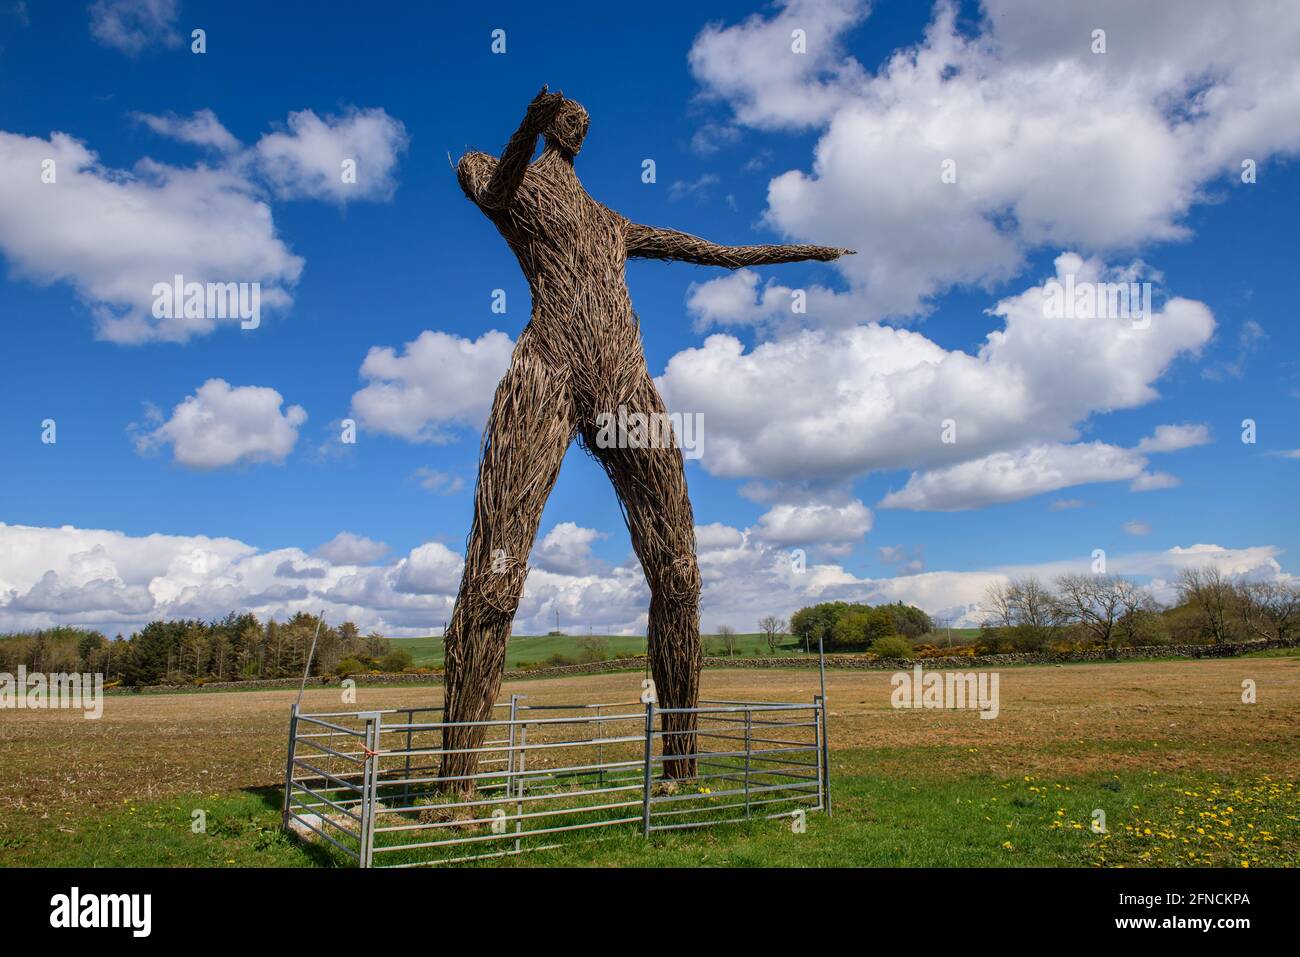 The Wicker man sculpture at East Kirkcarsewell Farm near Kirkcudbright. Scotland Stock Photo